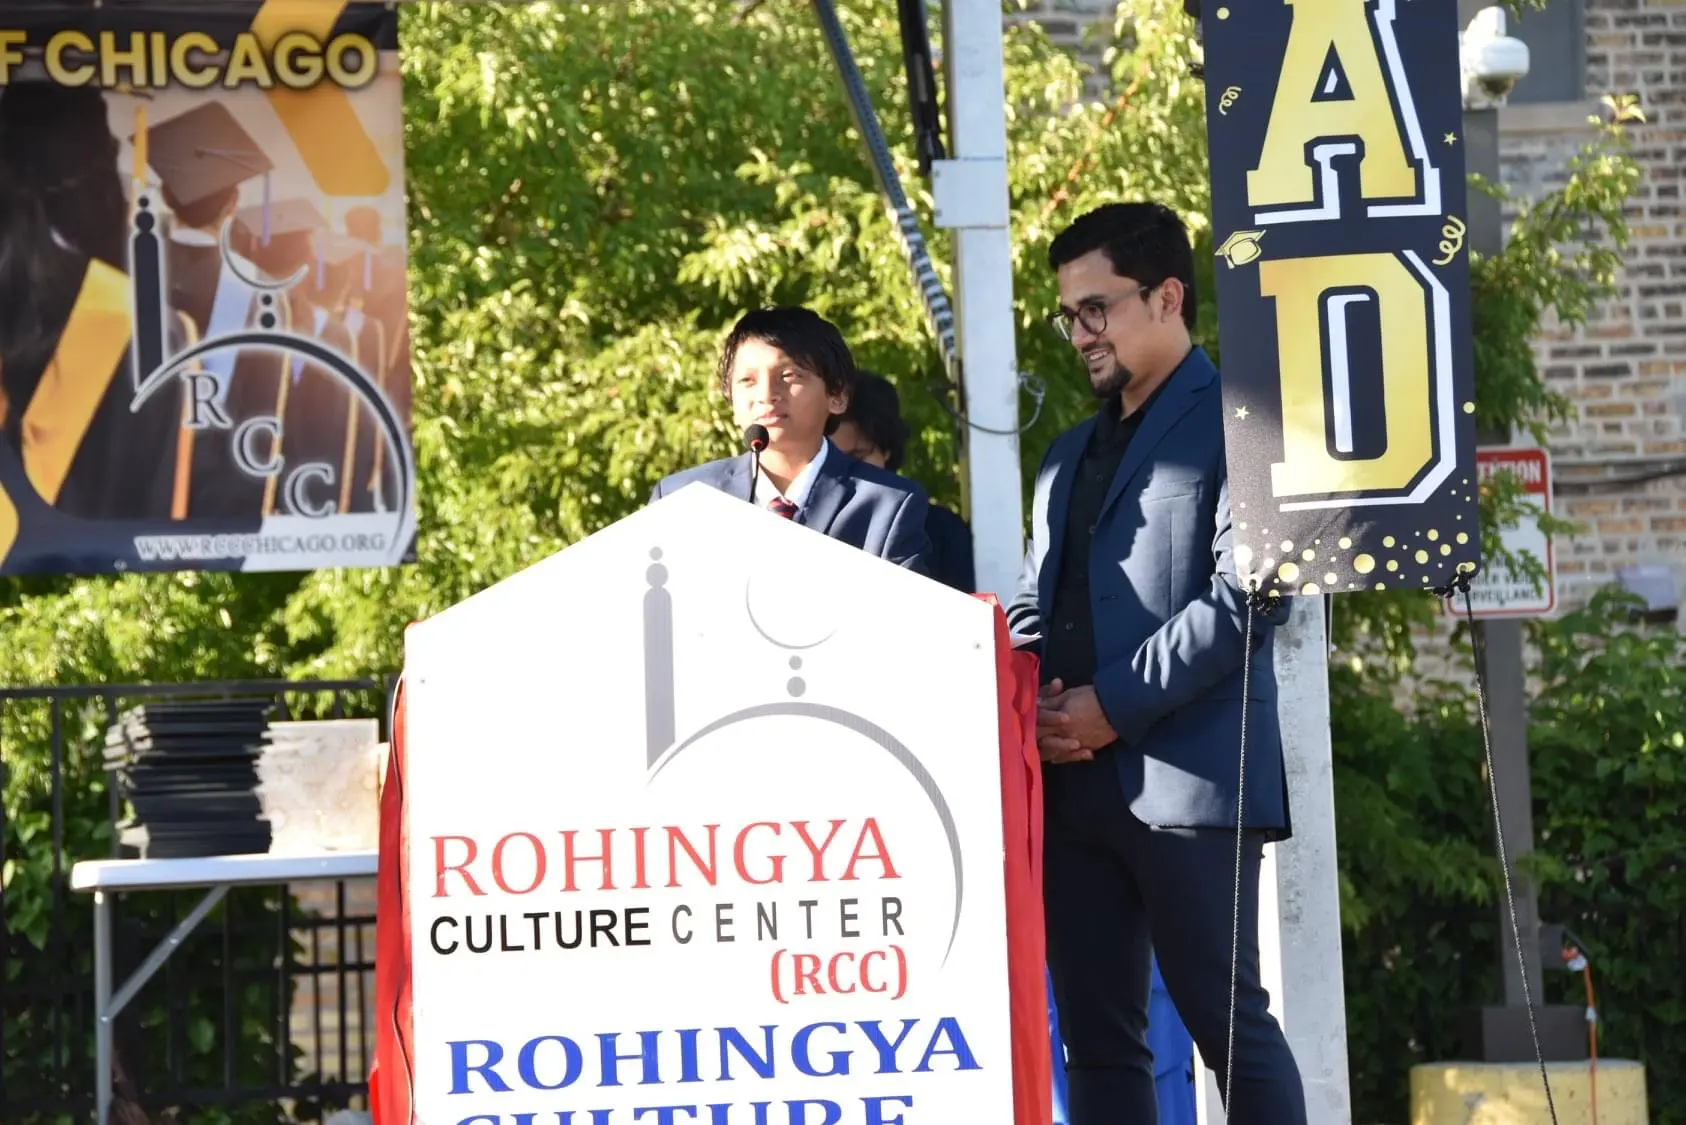 Imran was emcee at the Rohingya Cultural Center’s inaugural graduation